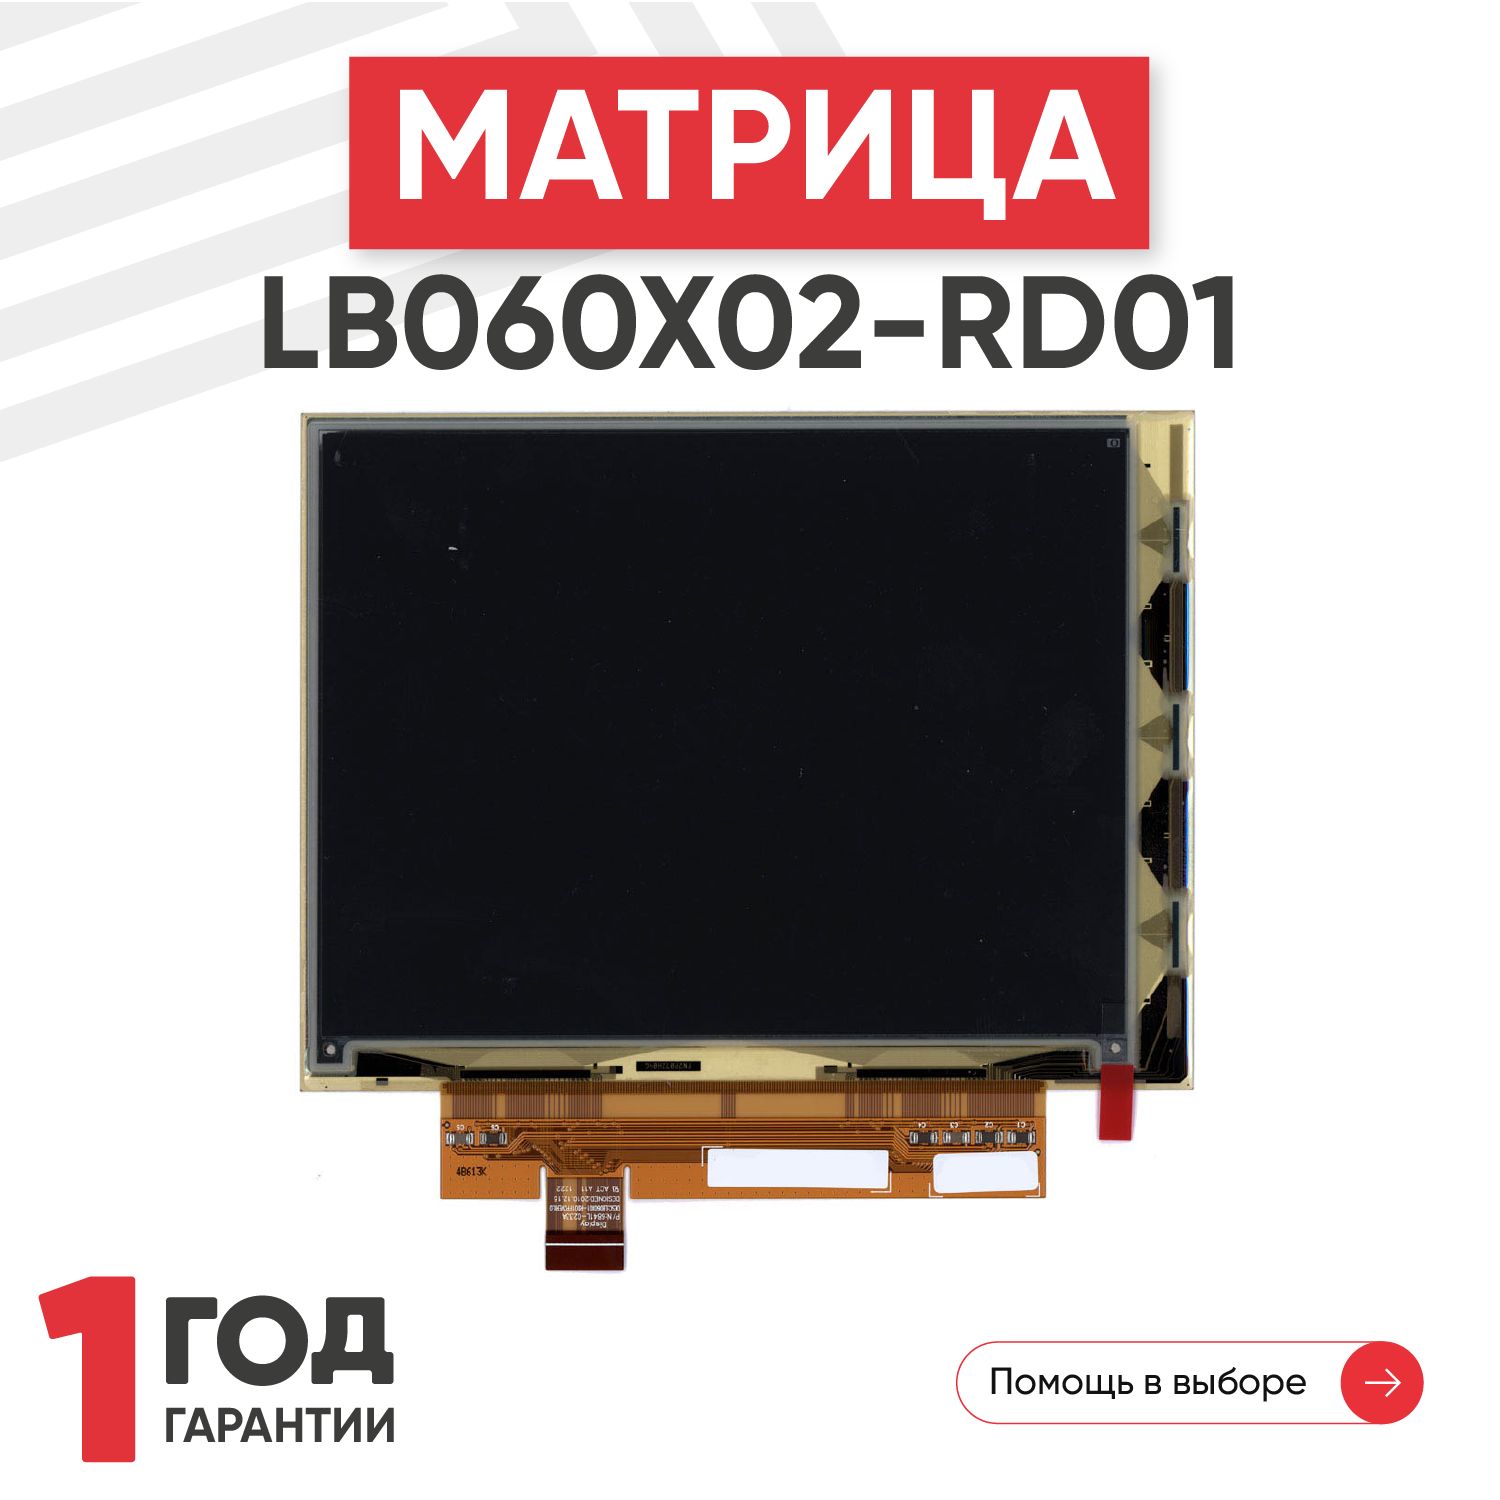 Матрица(экран,дисплей)RageXLB060X02-RD01дляэлектроннойкниги,e-inkмонохромная,гибкая,1024x768(XGA),6